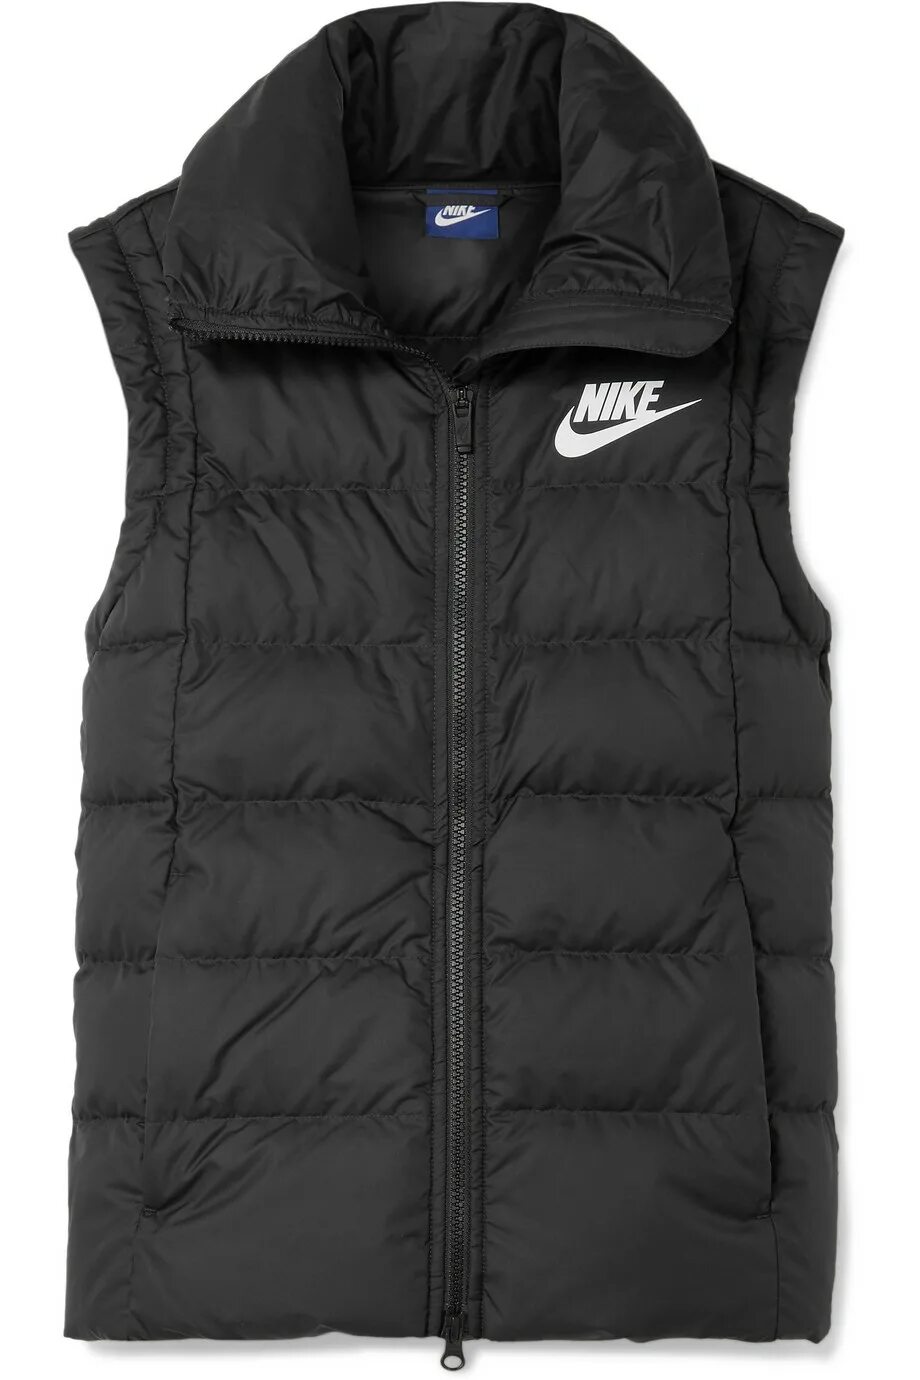 Жилет мужской Nike Basic down Vest 419009-238. Nike / жилет Allure down Vest. Жилетка Nike Nocta. Жилет Nike Synthetic fill. Жилетка без капюшона